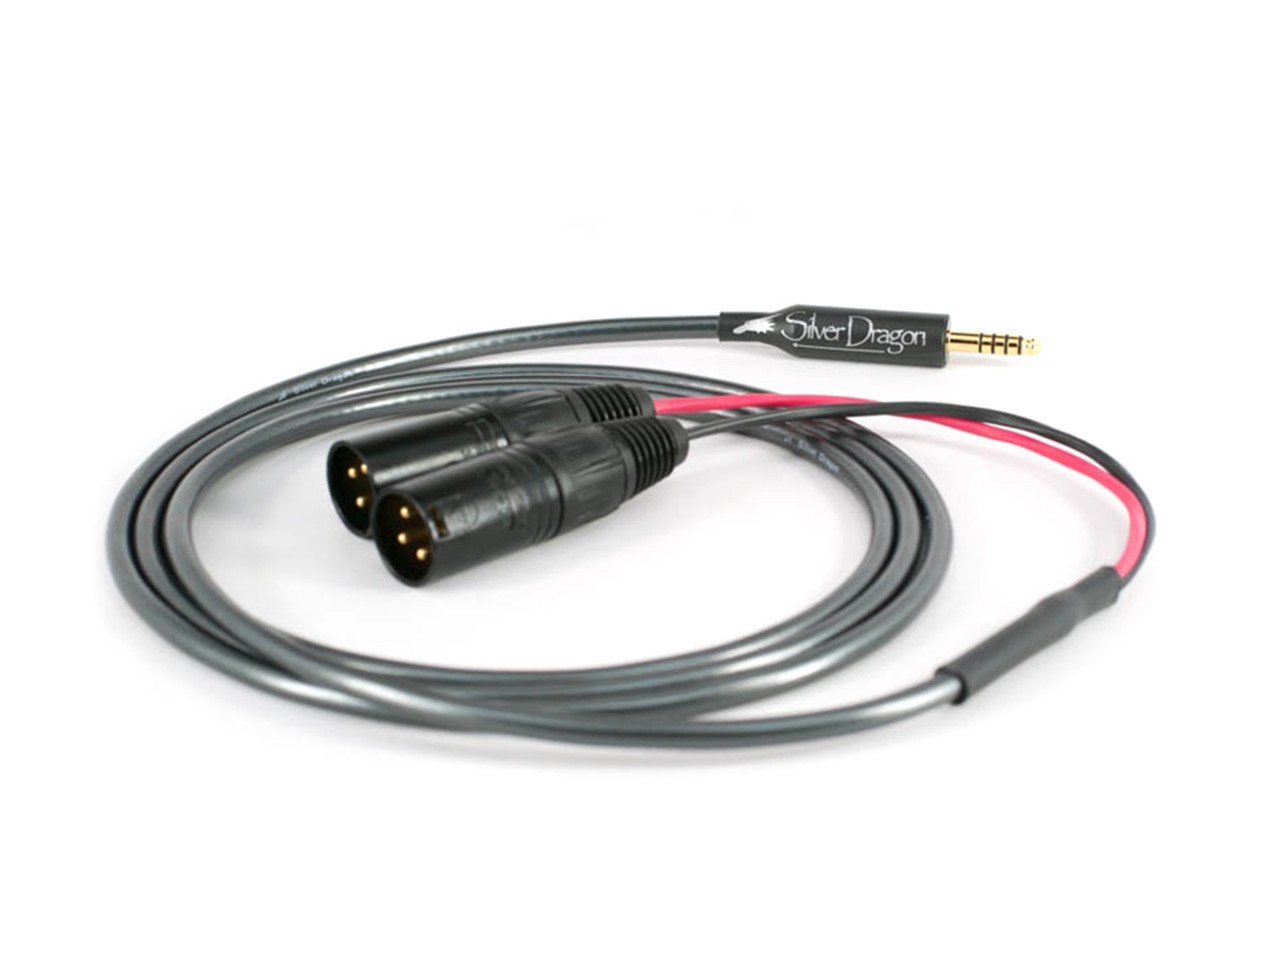 Silver Dragon Premium Cable for HiFiMan Headphones